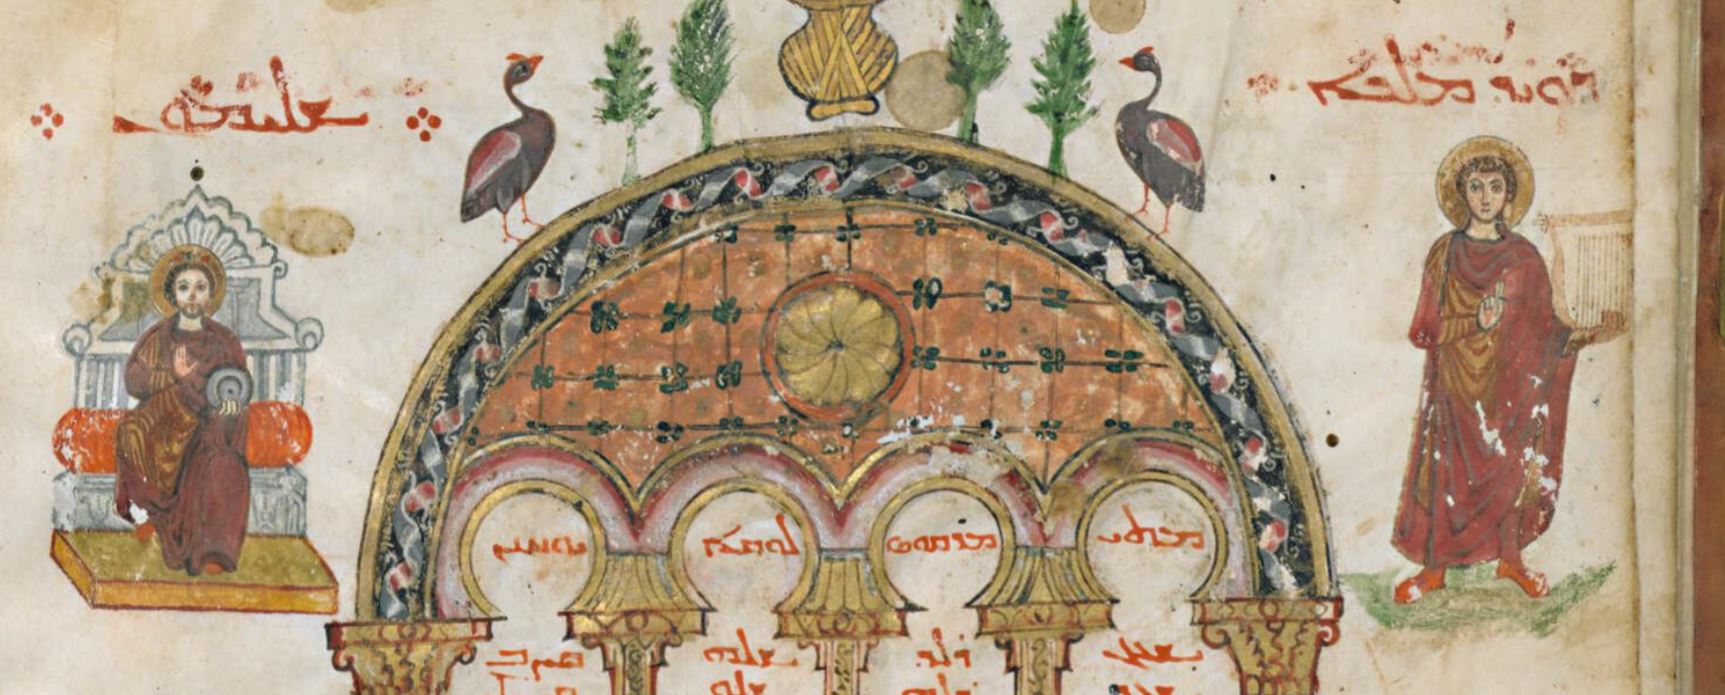 586 Evangiles de Rabula Biblioteca Medicea Laurenziana, cod. Plut. 1.56 fol 4v detail salomon david